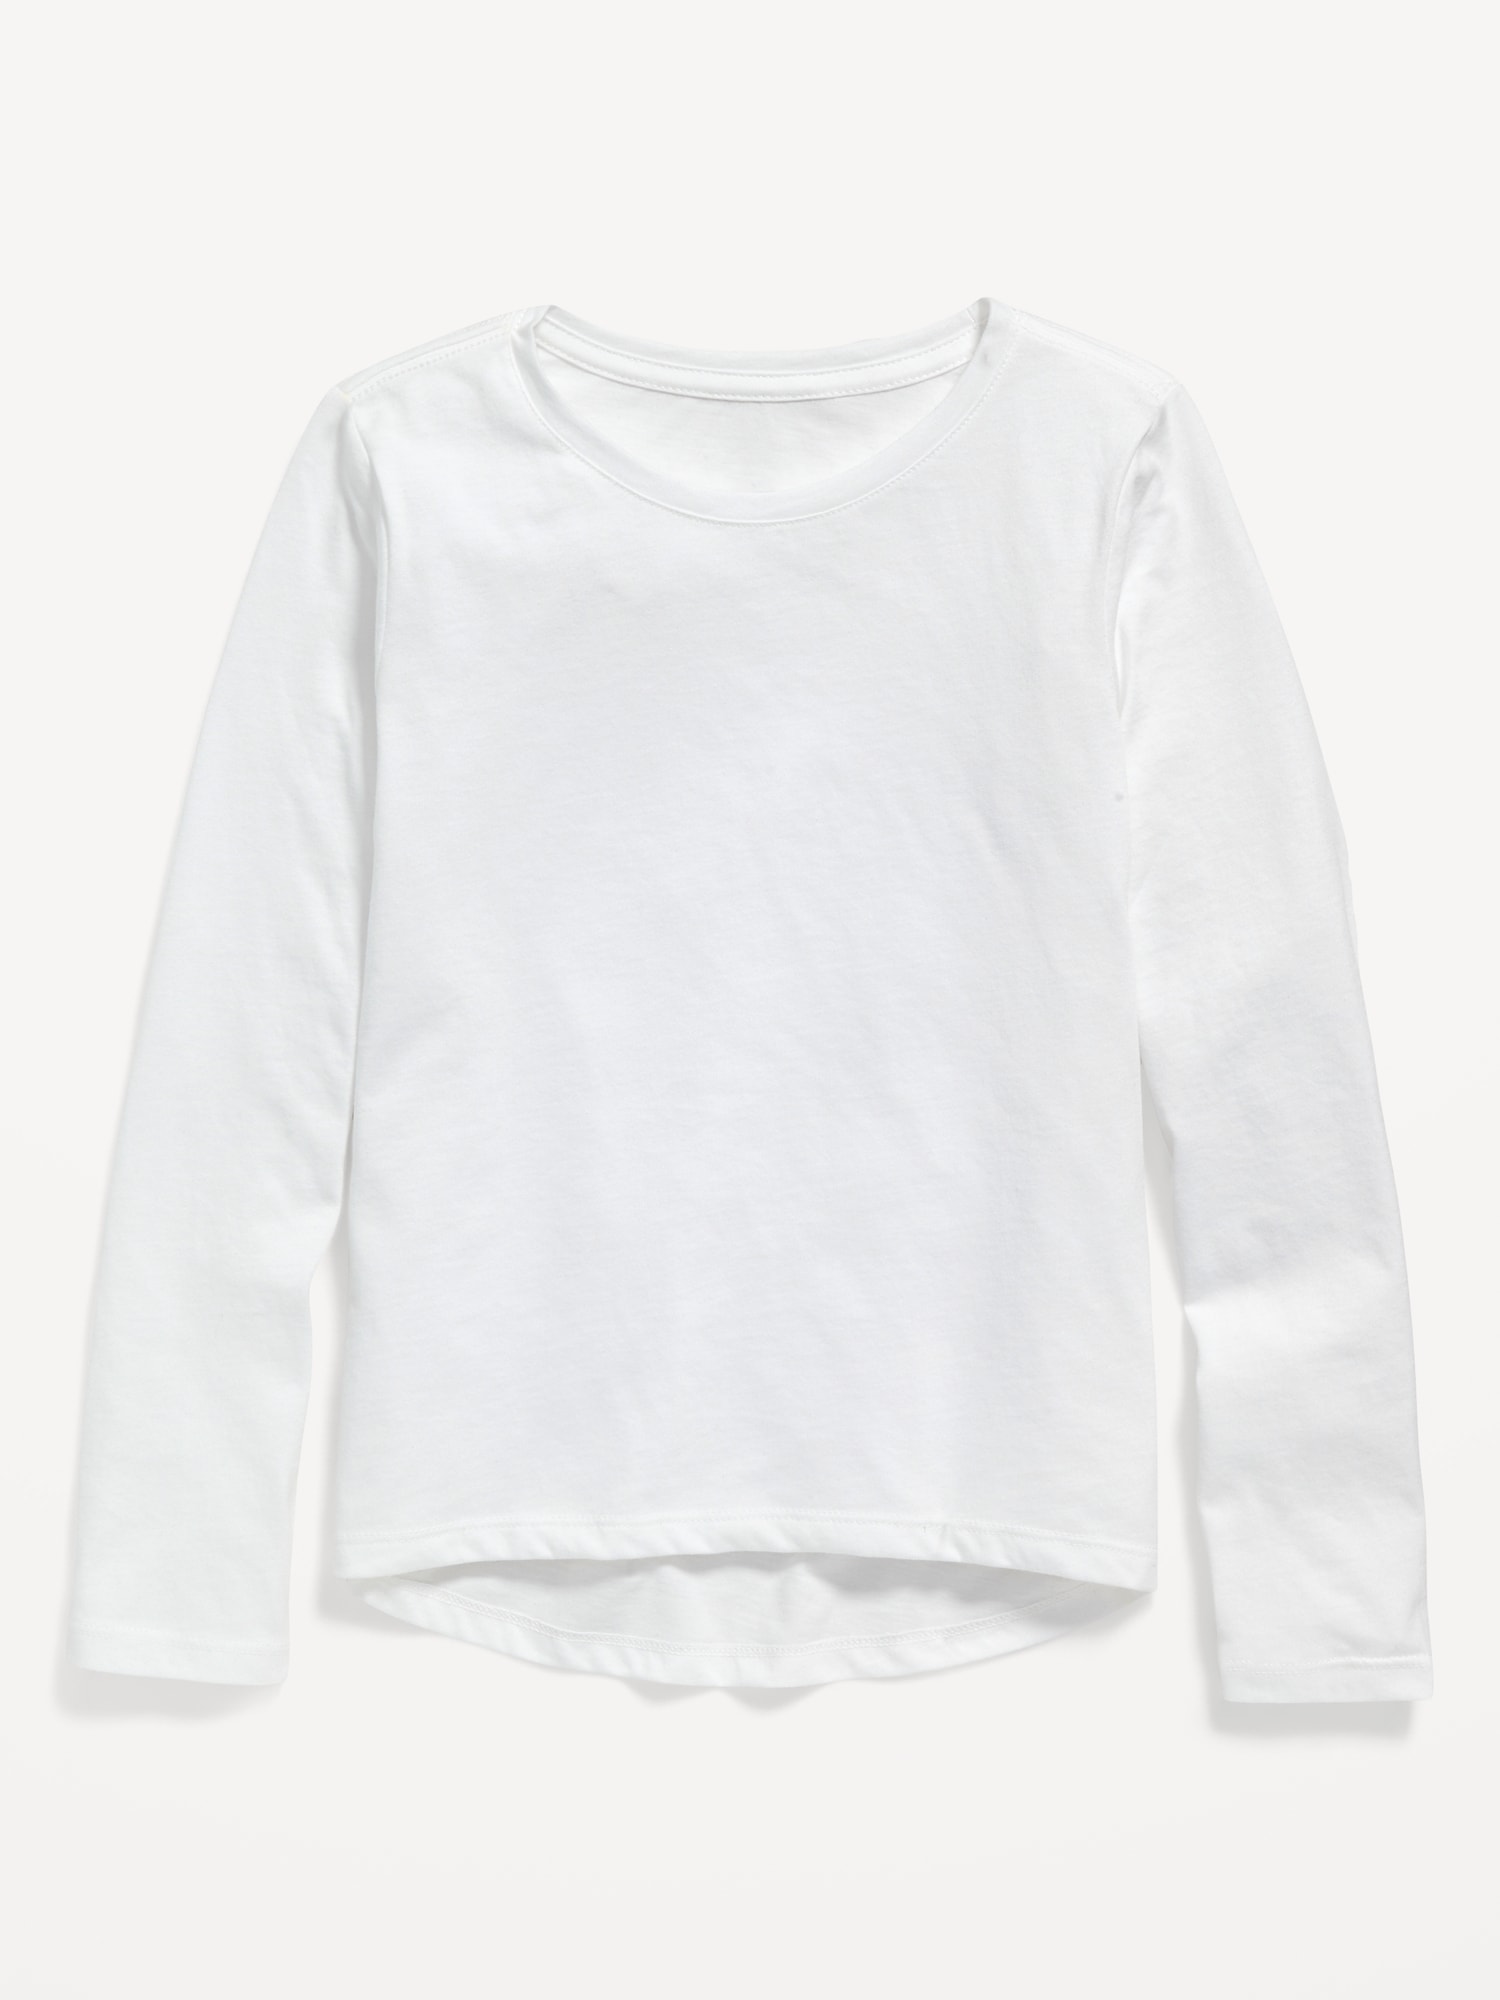 Old Navy Softest Long-Sleeve Scoop-Neck T-Shirt for Girls white. 1